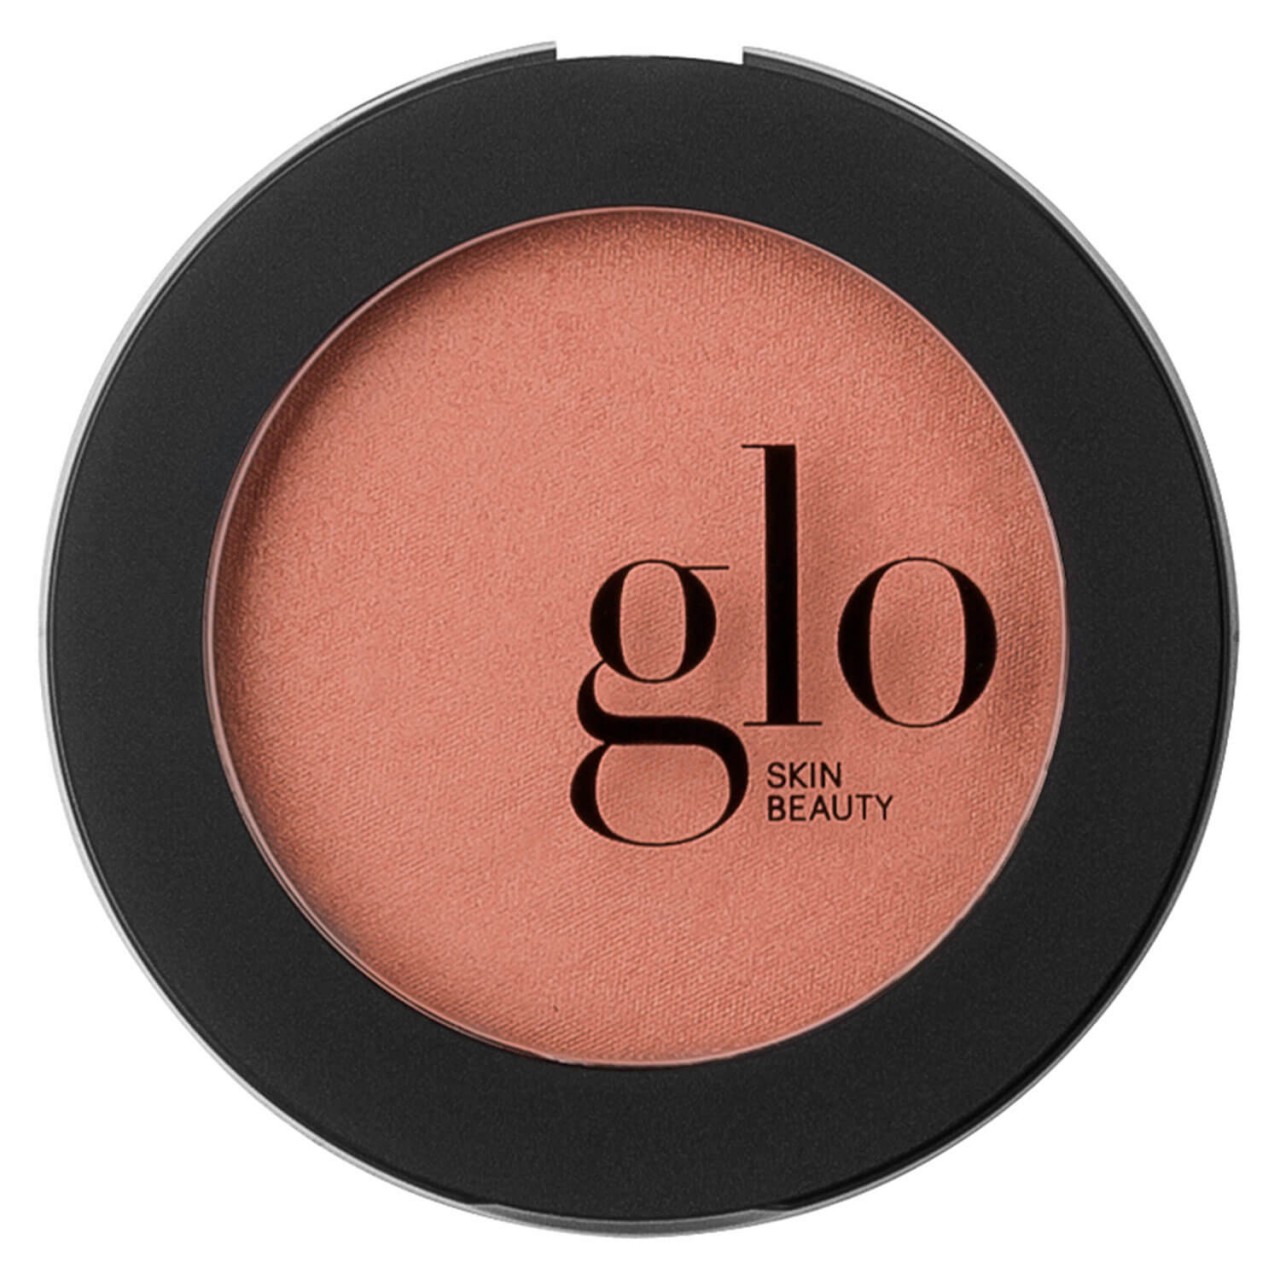 Glo Skin Beauty Blush - Blush Soleil von Glo Skin Beauty